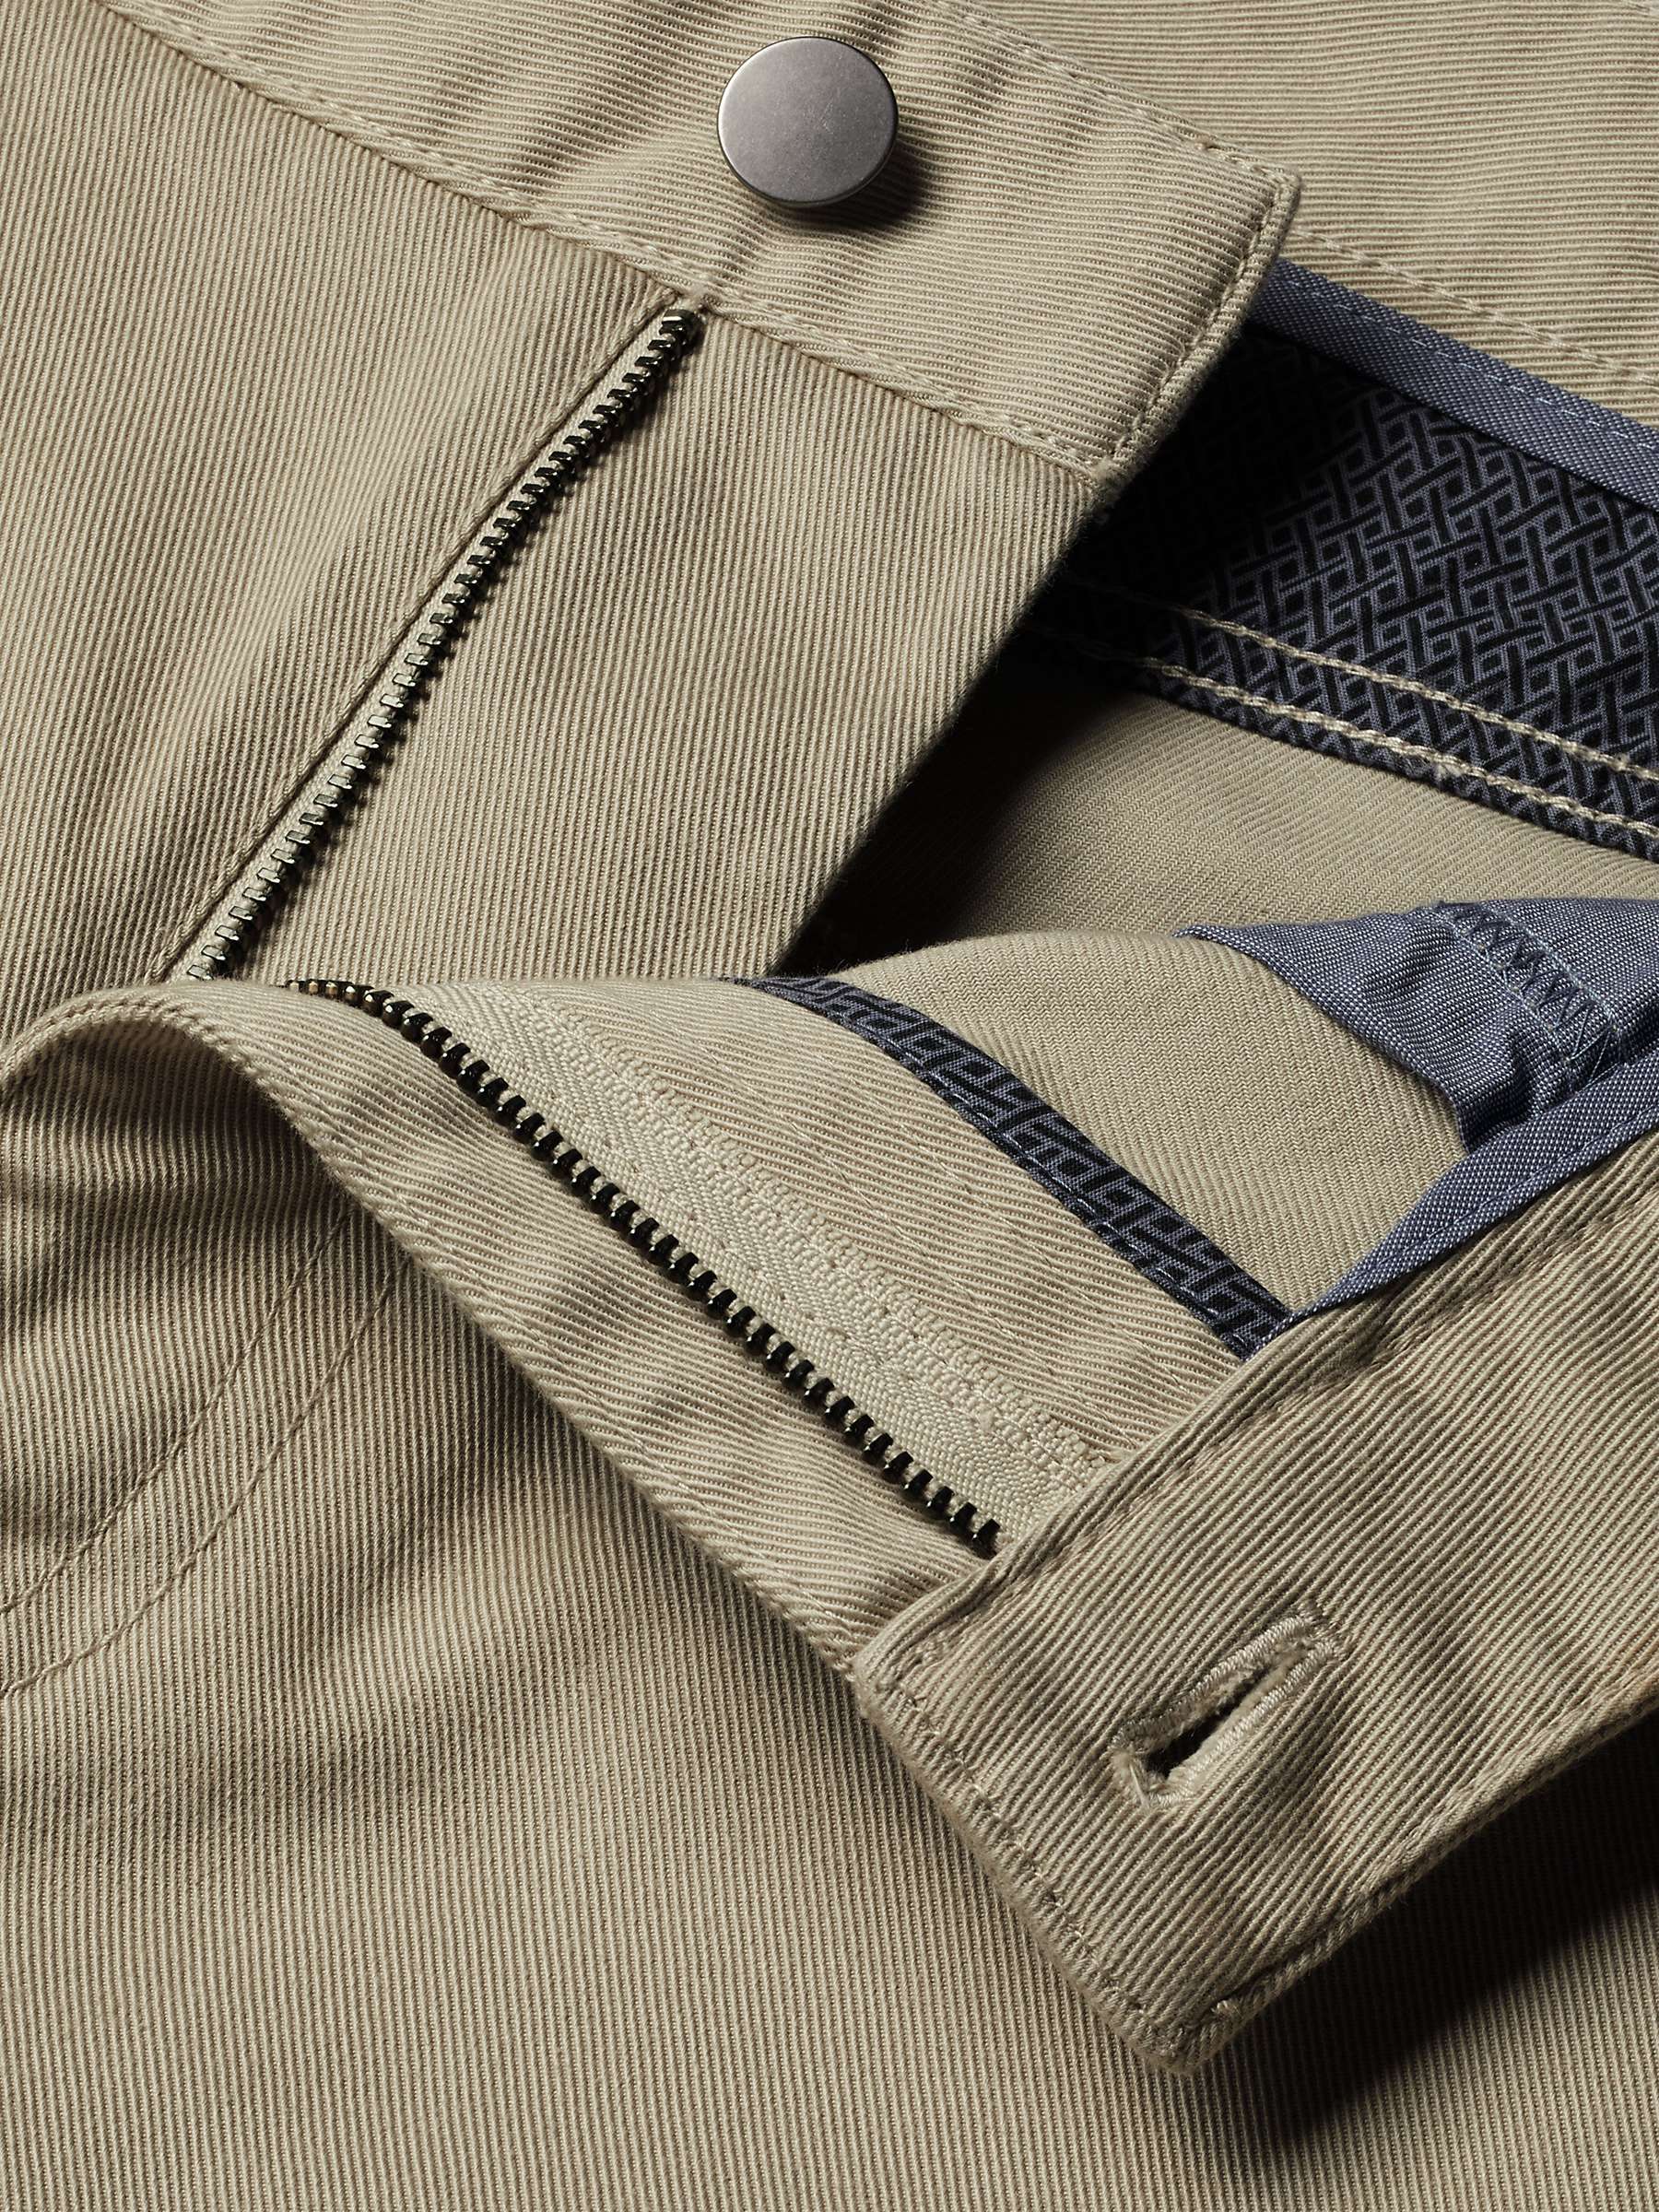 Buy Charles Tyrwhitt Twill 5 Pocket Slim Fit Jeans Online at johnlewis.com